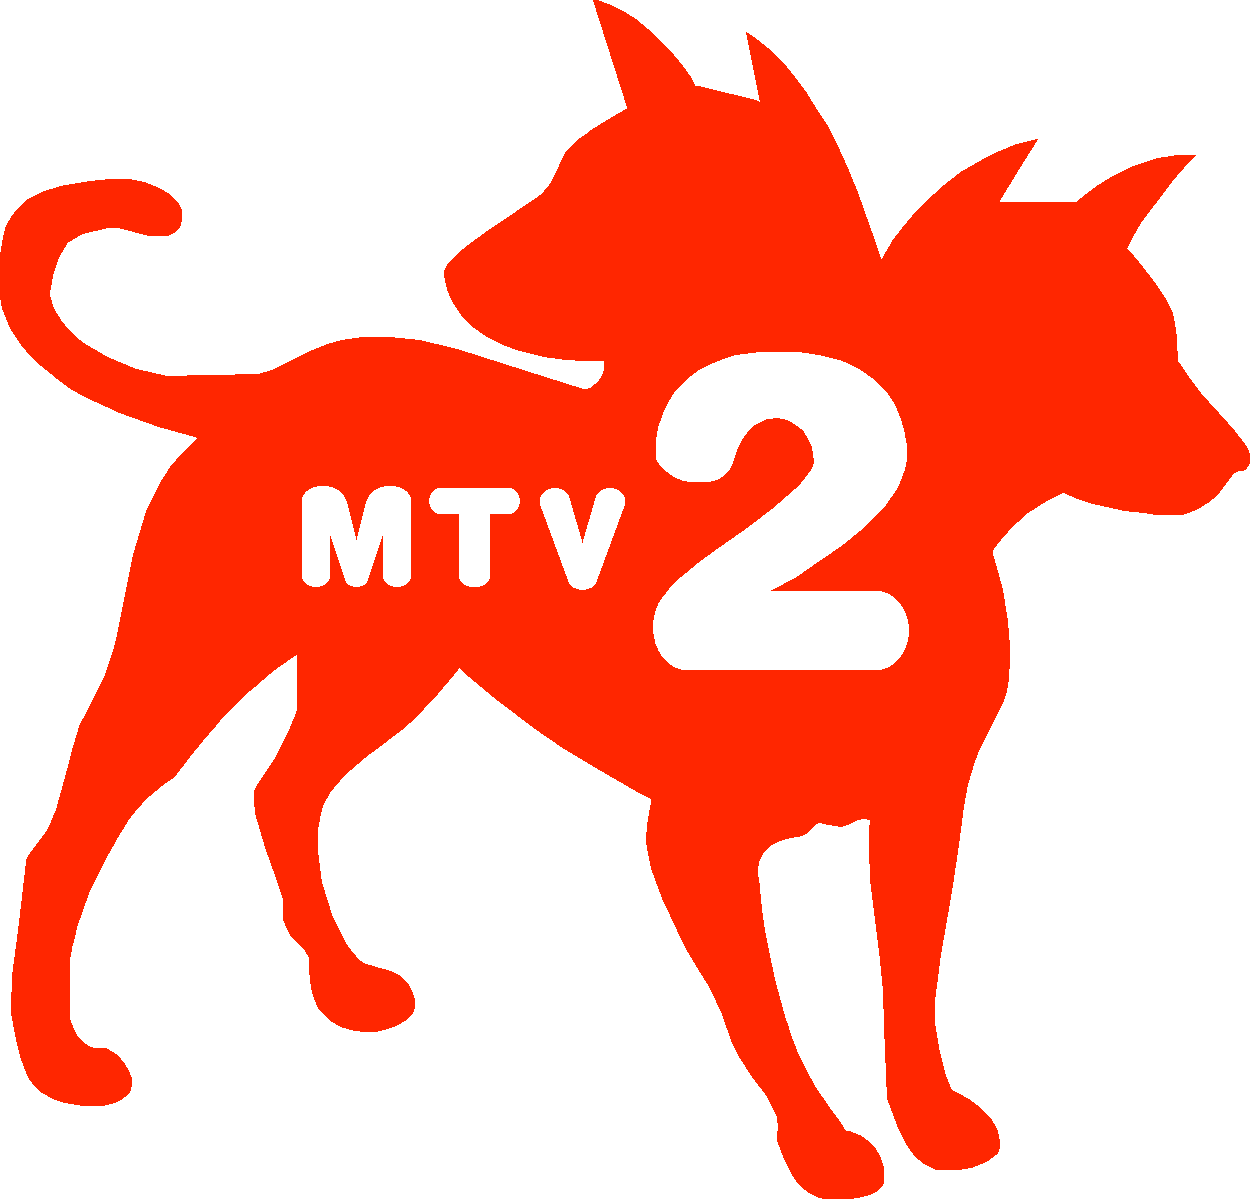 MTV2 Logo - Nintendofan12 - MTV2 Logo 5 HD wallpaper and background